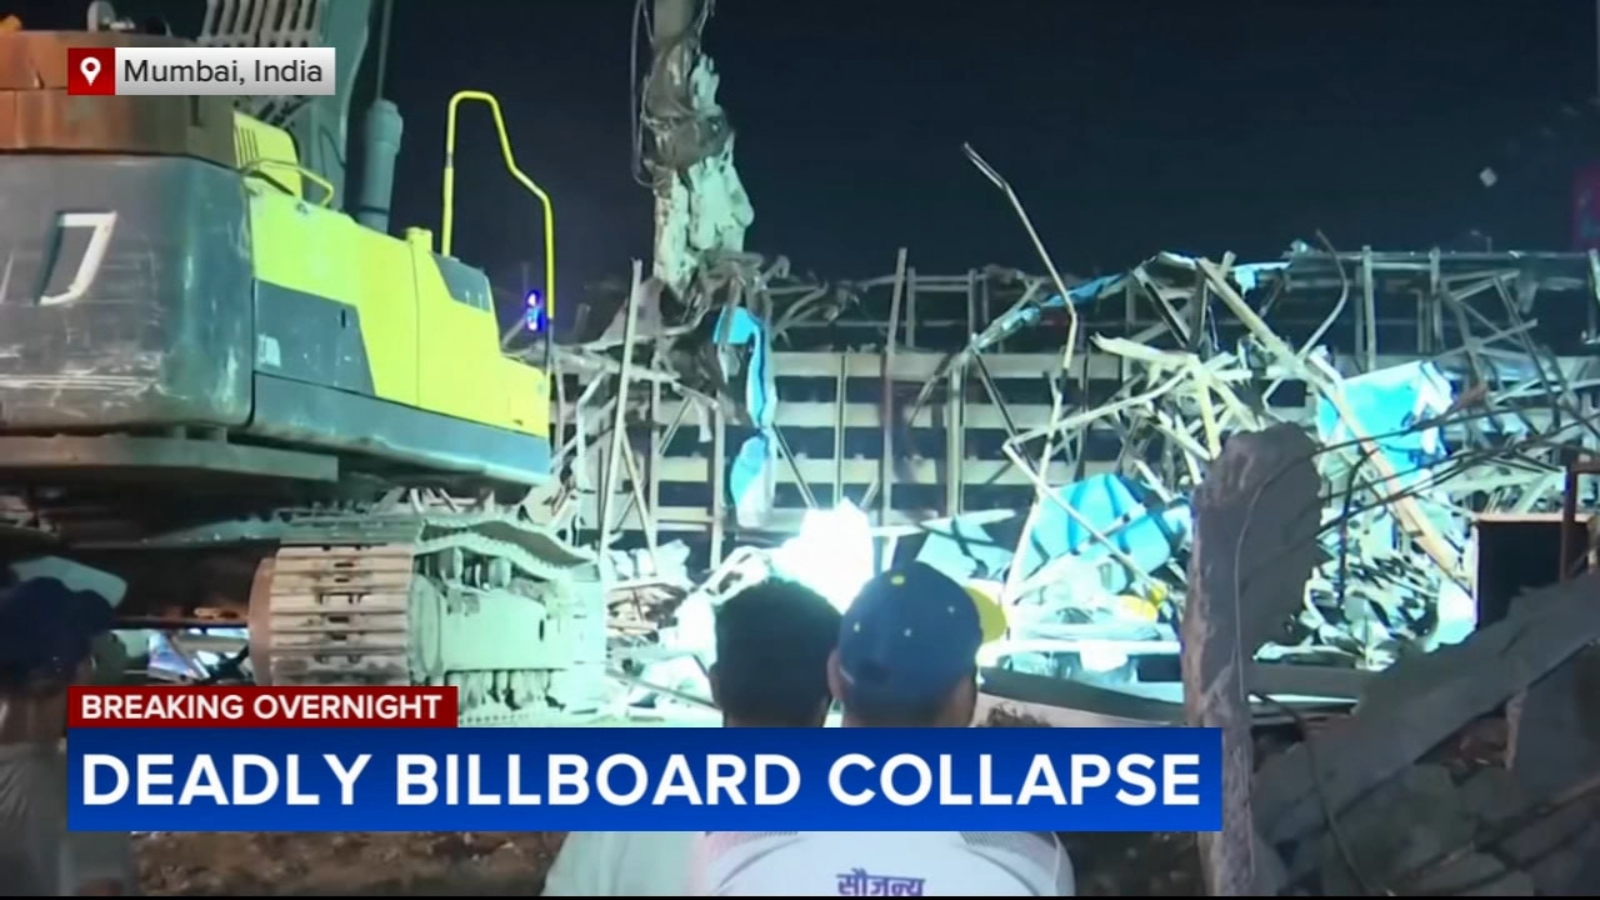 Mumbai billboard collapse kills 3, hurts 59 amid heavy rains in India [Video]